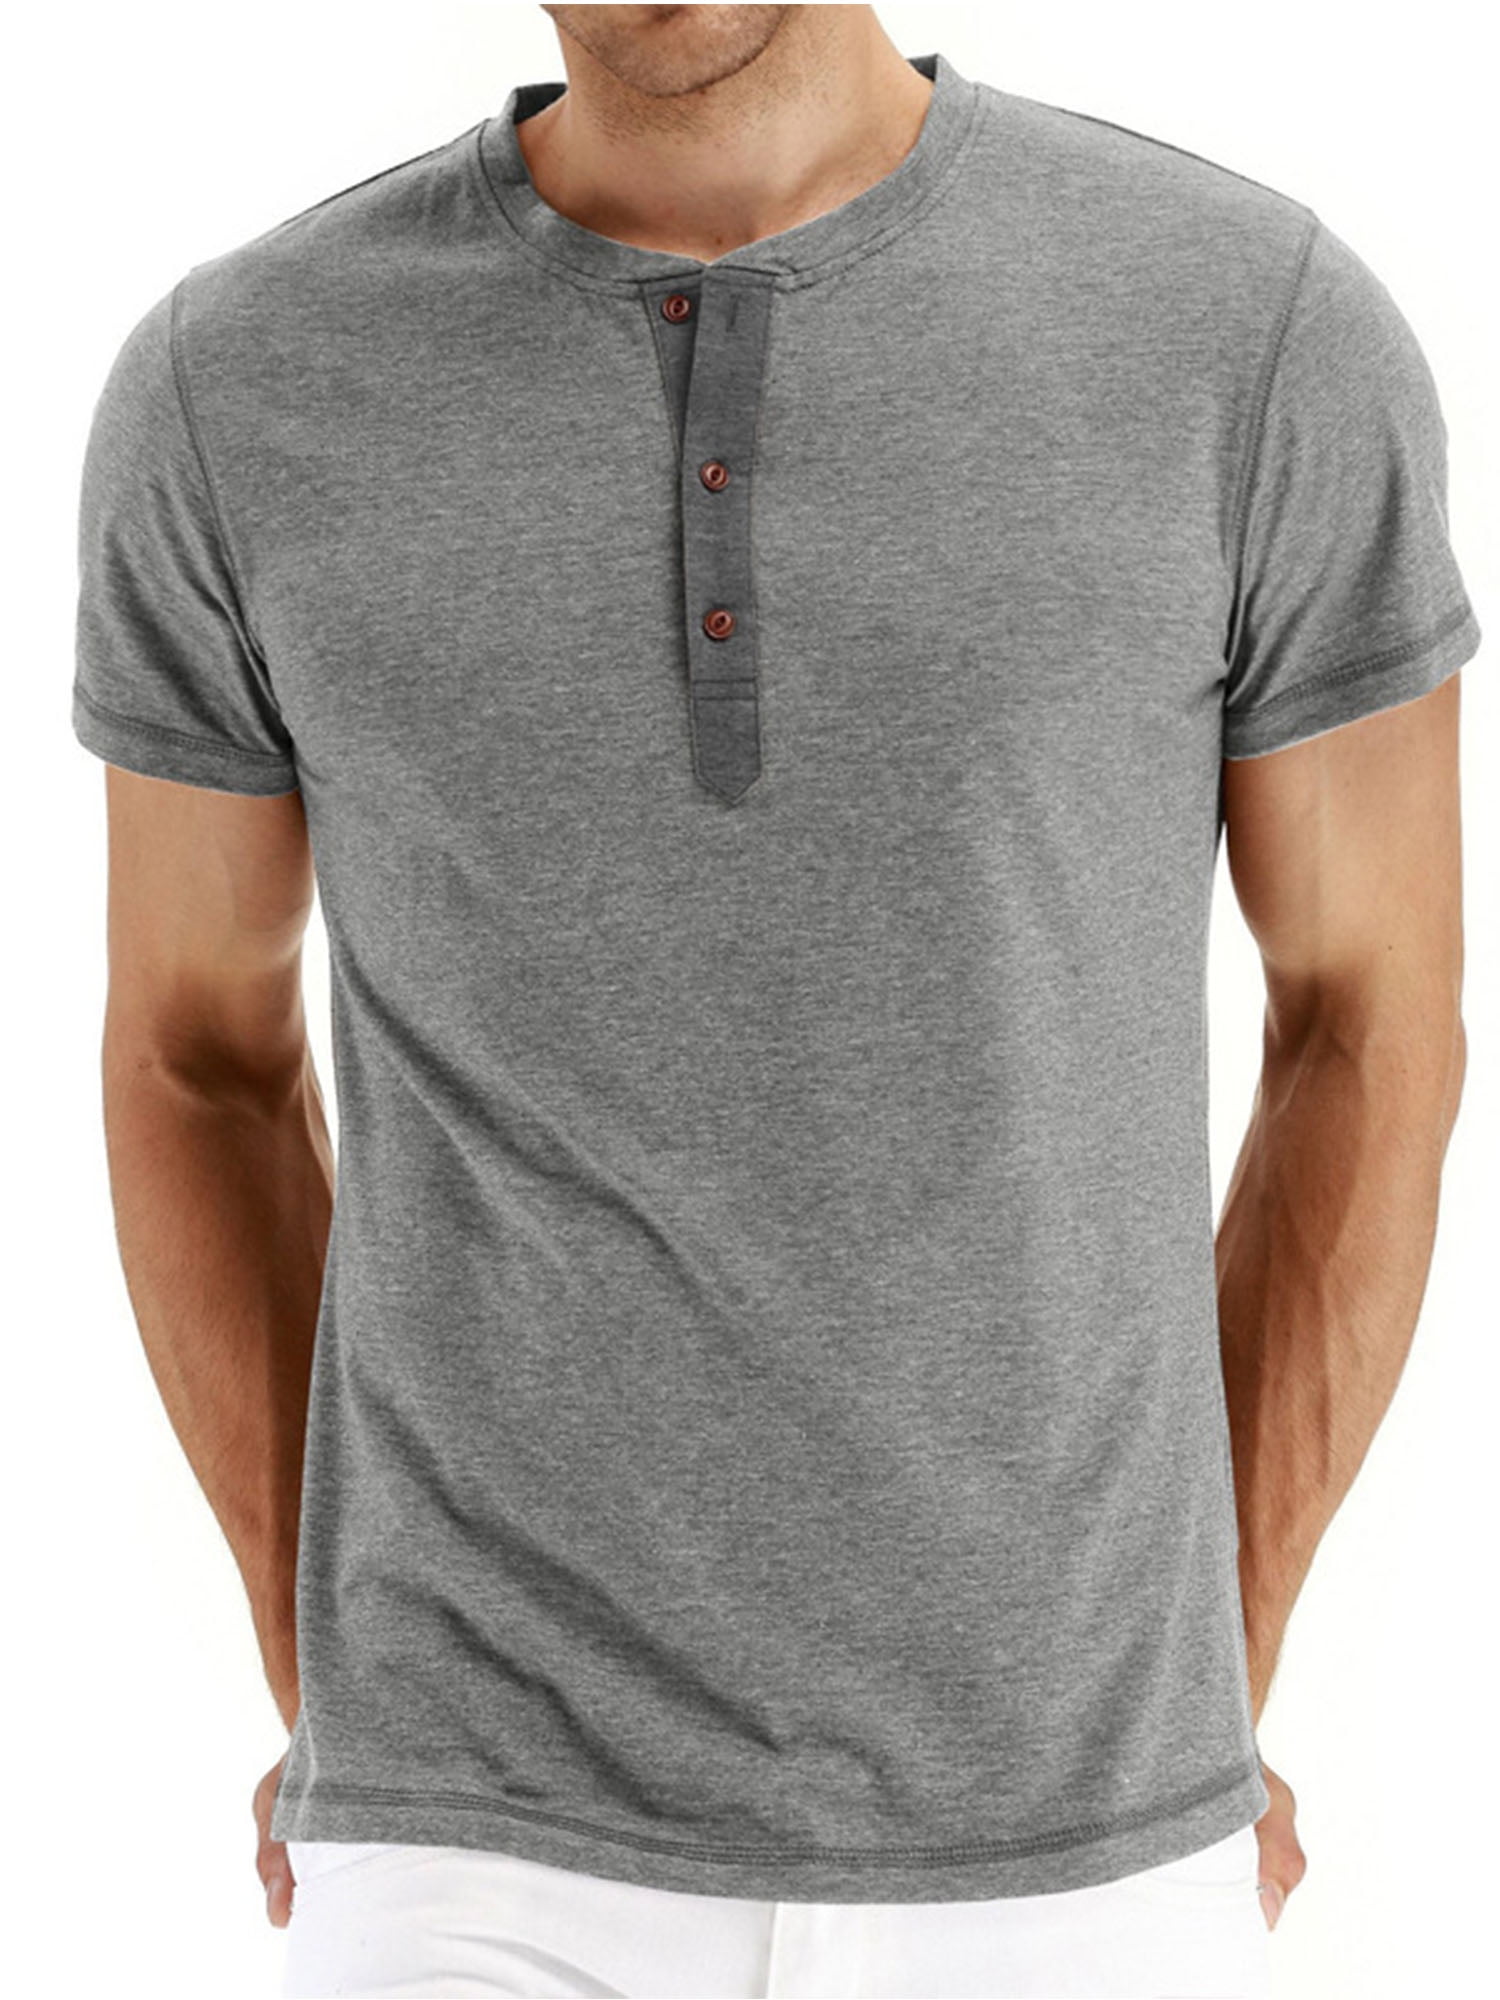 HETHCODE Men's Classic Comfort Soft Regular Fit Short Sleeve Henley T-Shirt Tee 